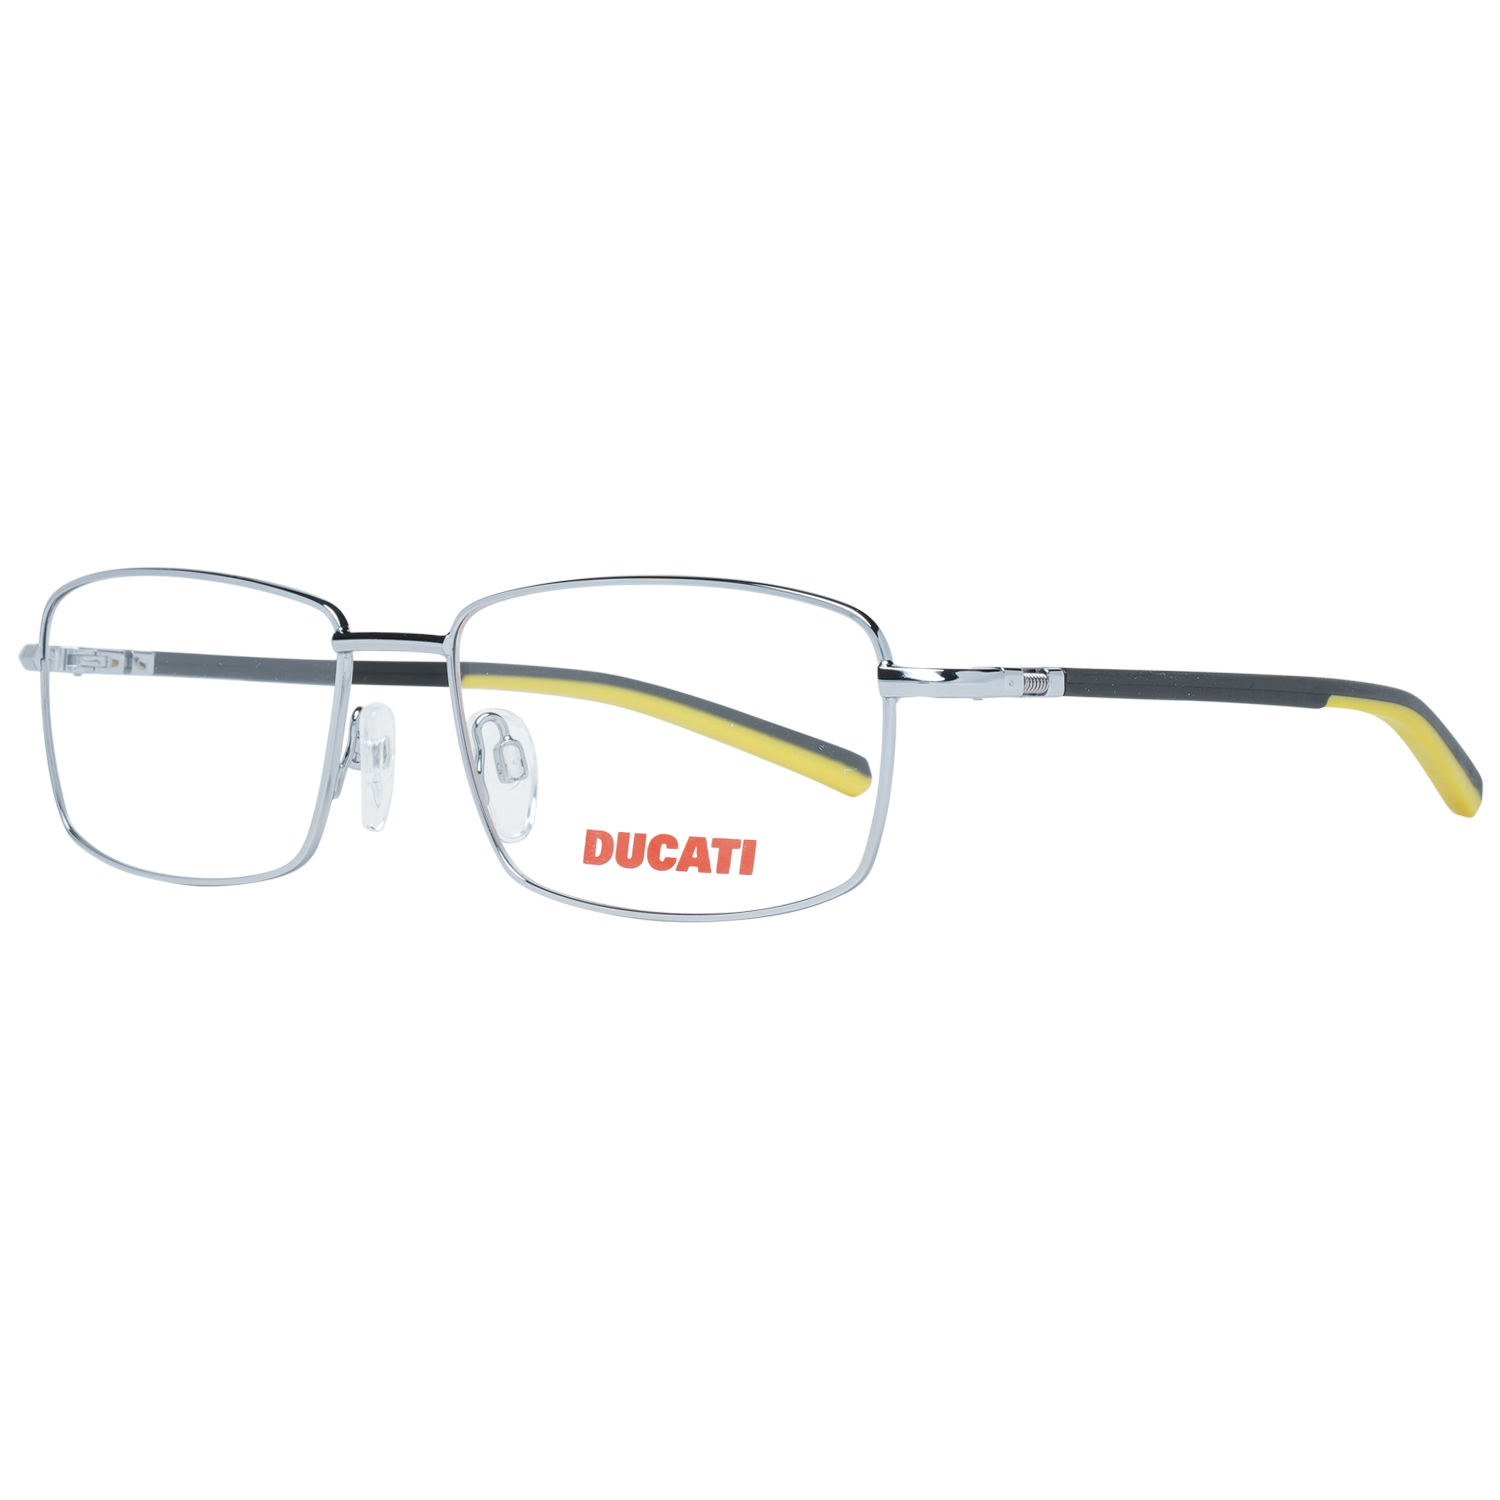 Ducati Frames Ducati Optical Frame DA3002 900 55 Eyeglasses Eyewear UK USA Australia 